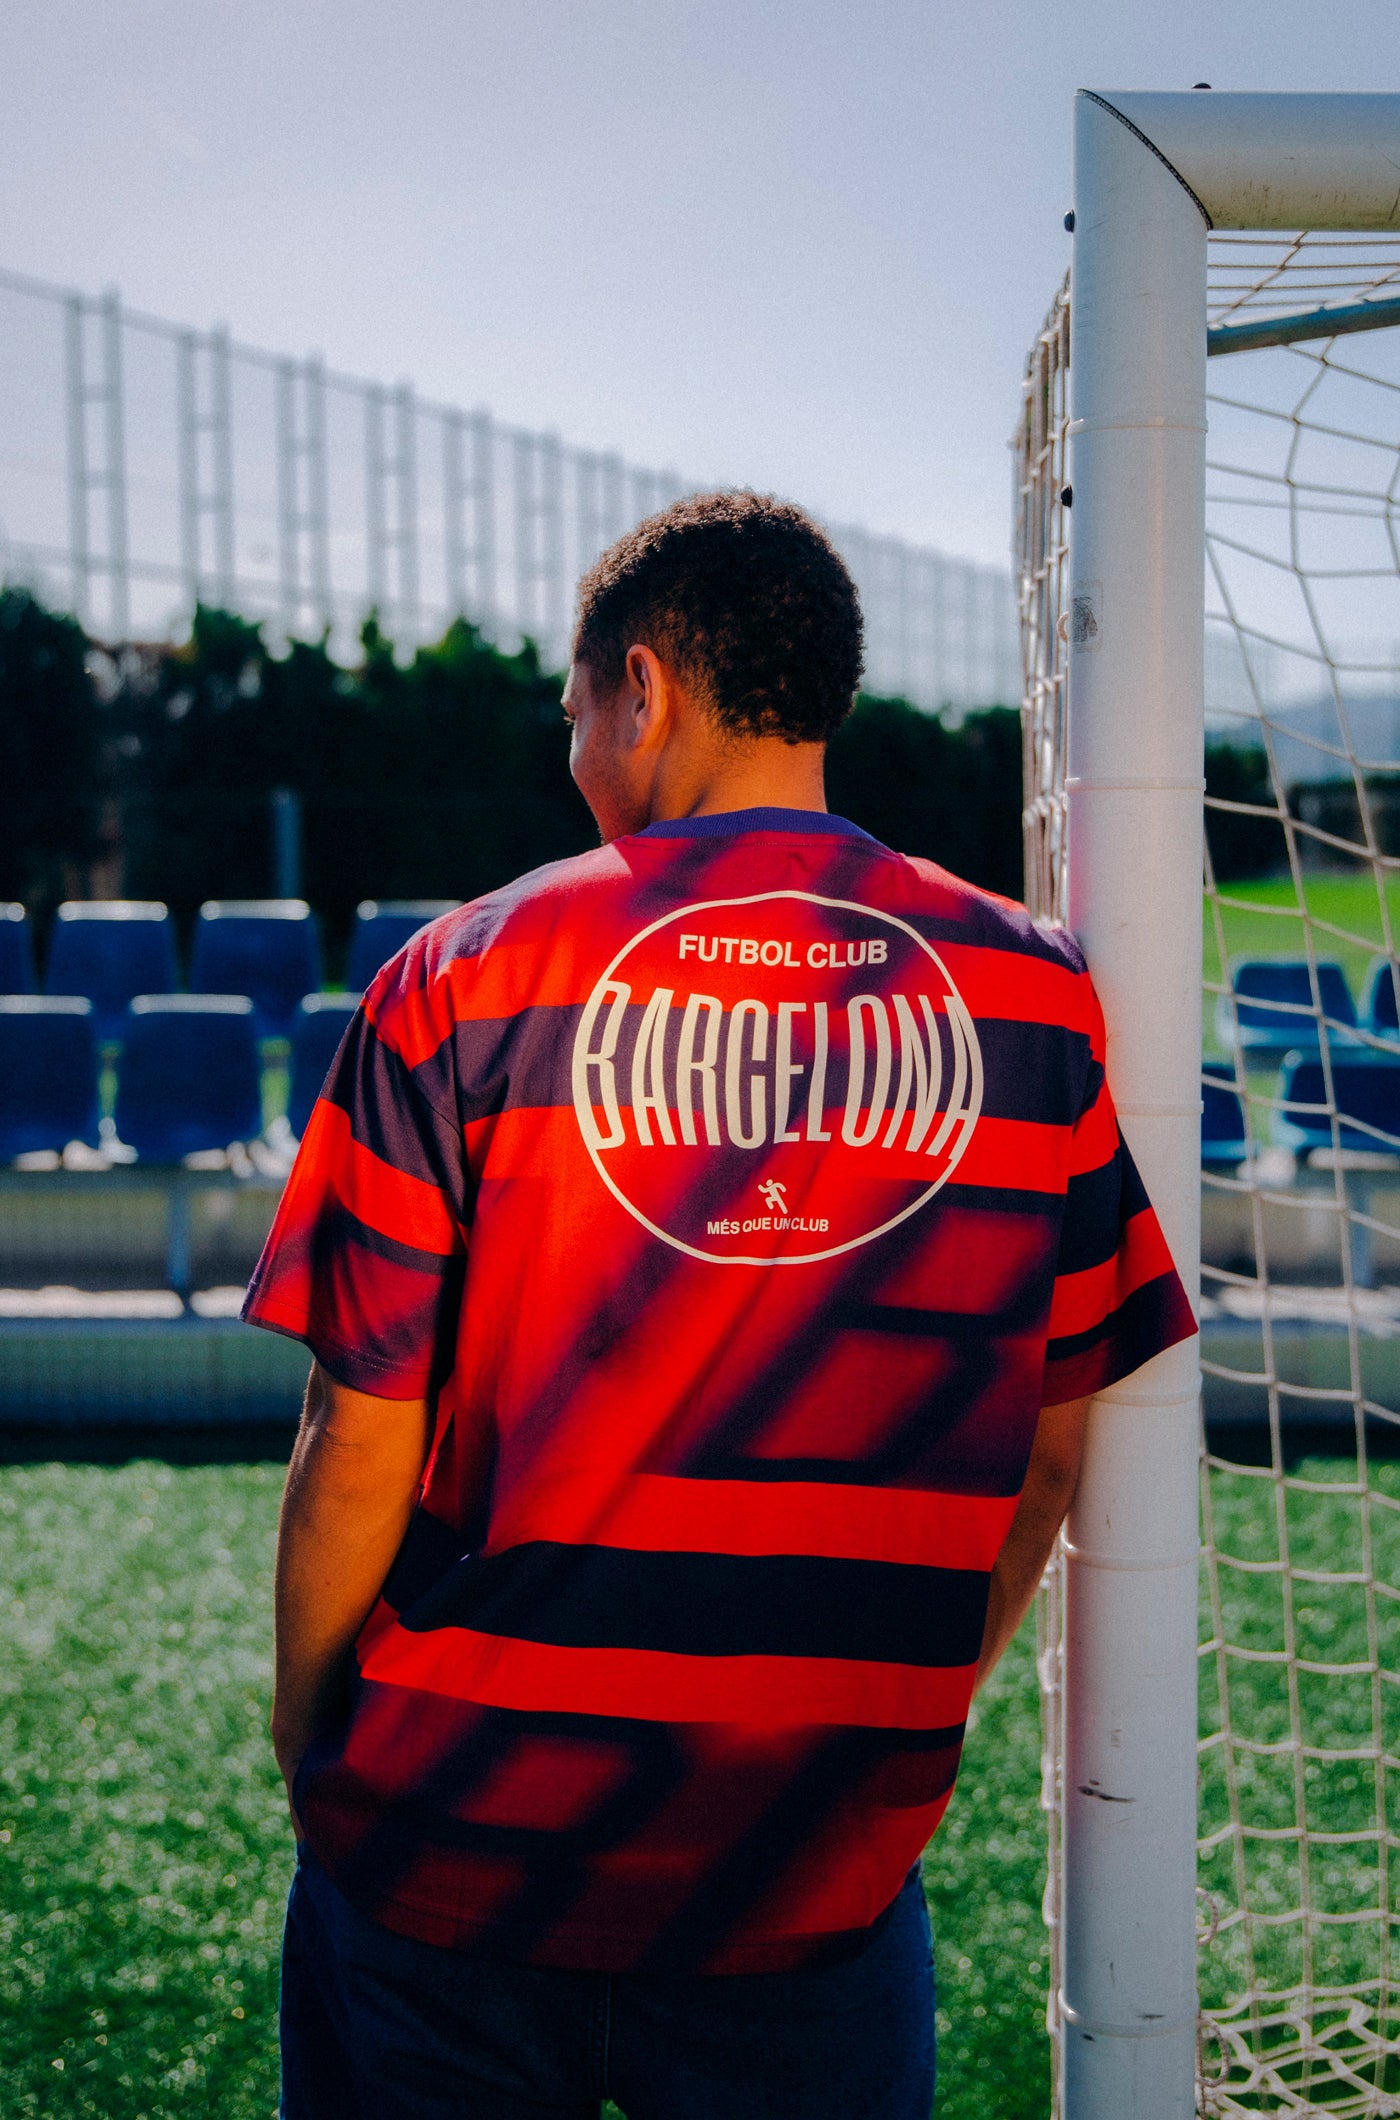 Kurzarm-T-Shirt mit Barça-Aufdruck